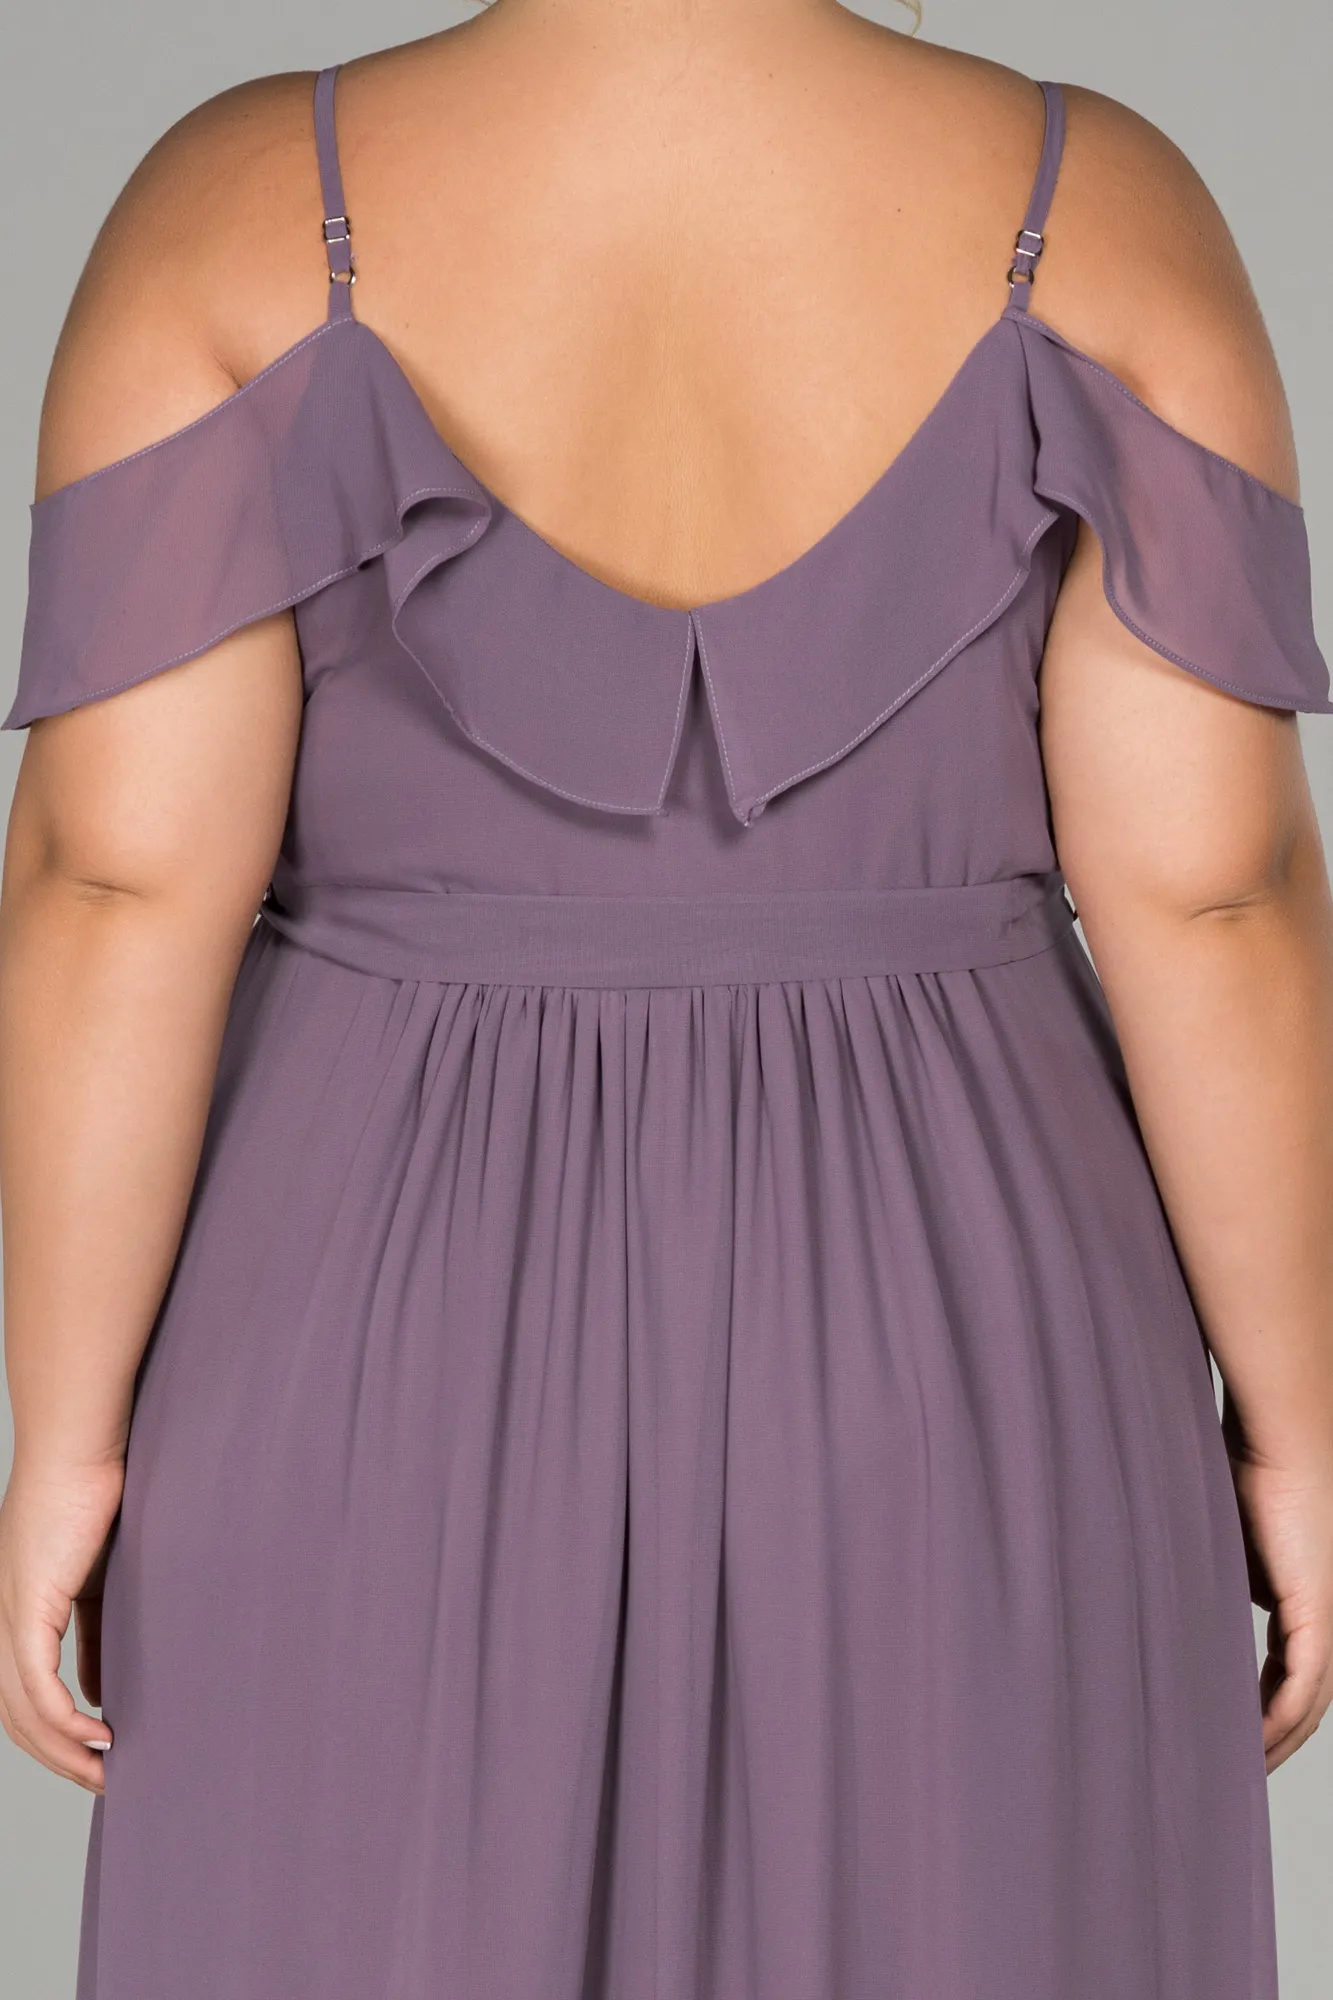 Lavender-Long Plus Size Evening Dress ABU1449